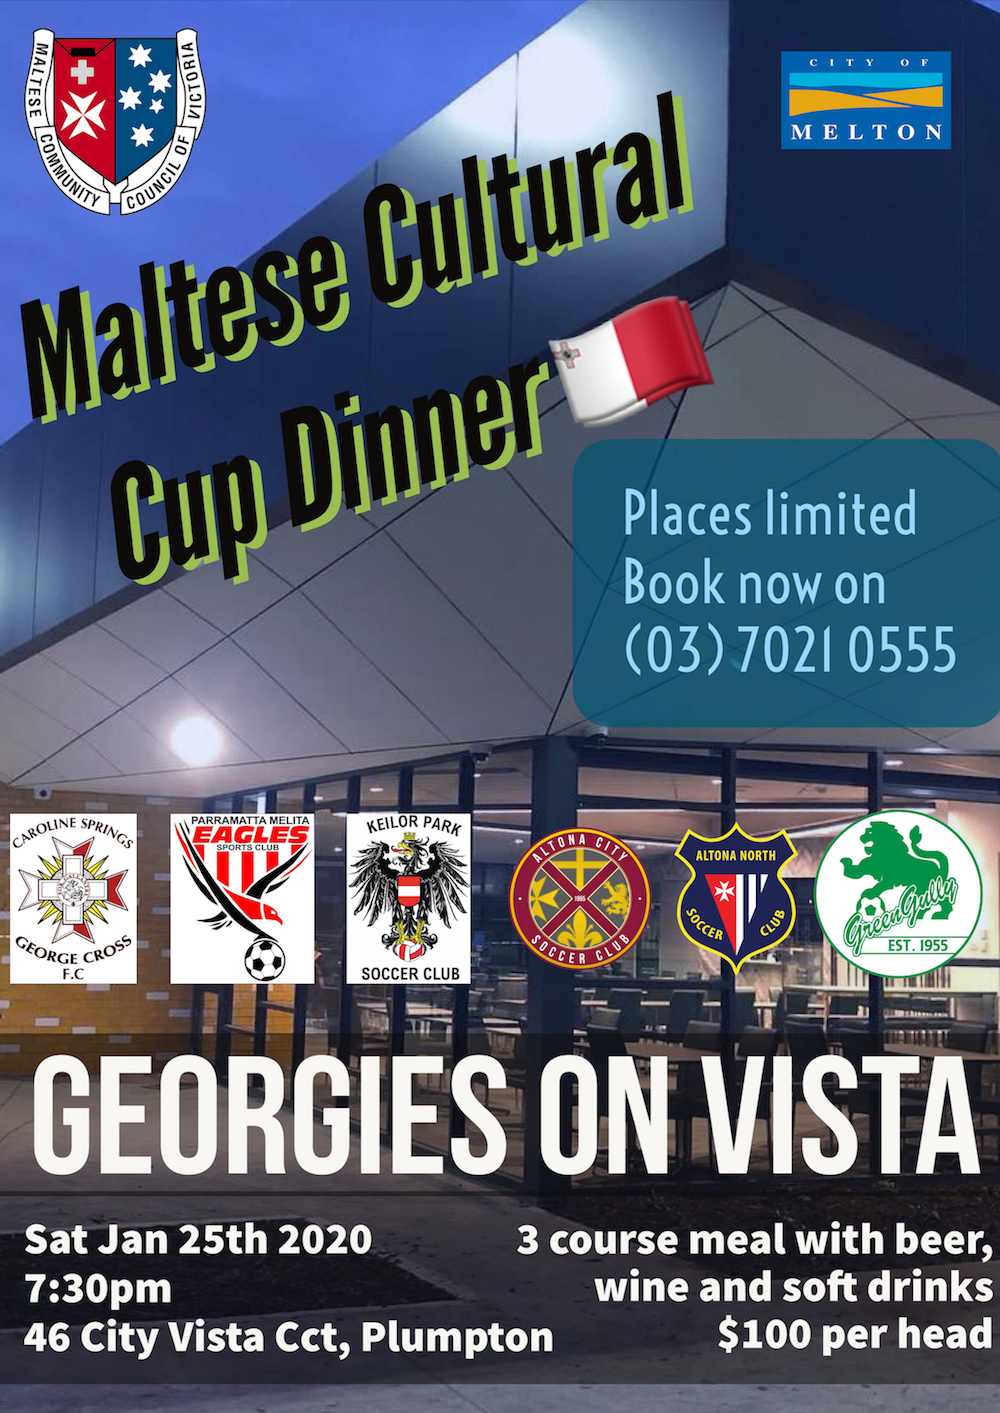 Maltese Cultural Cup Dinner